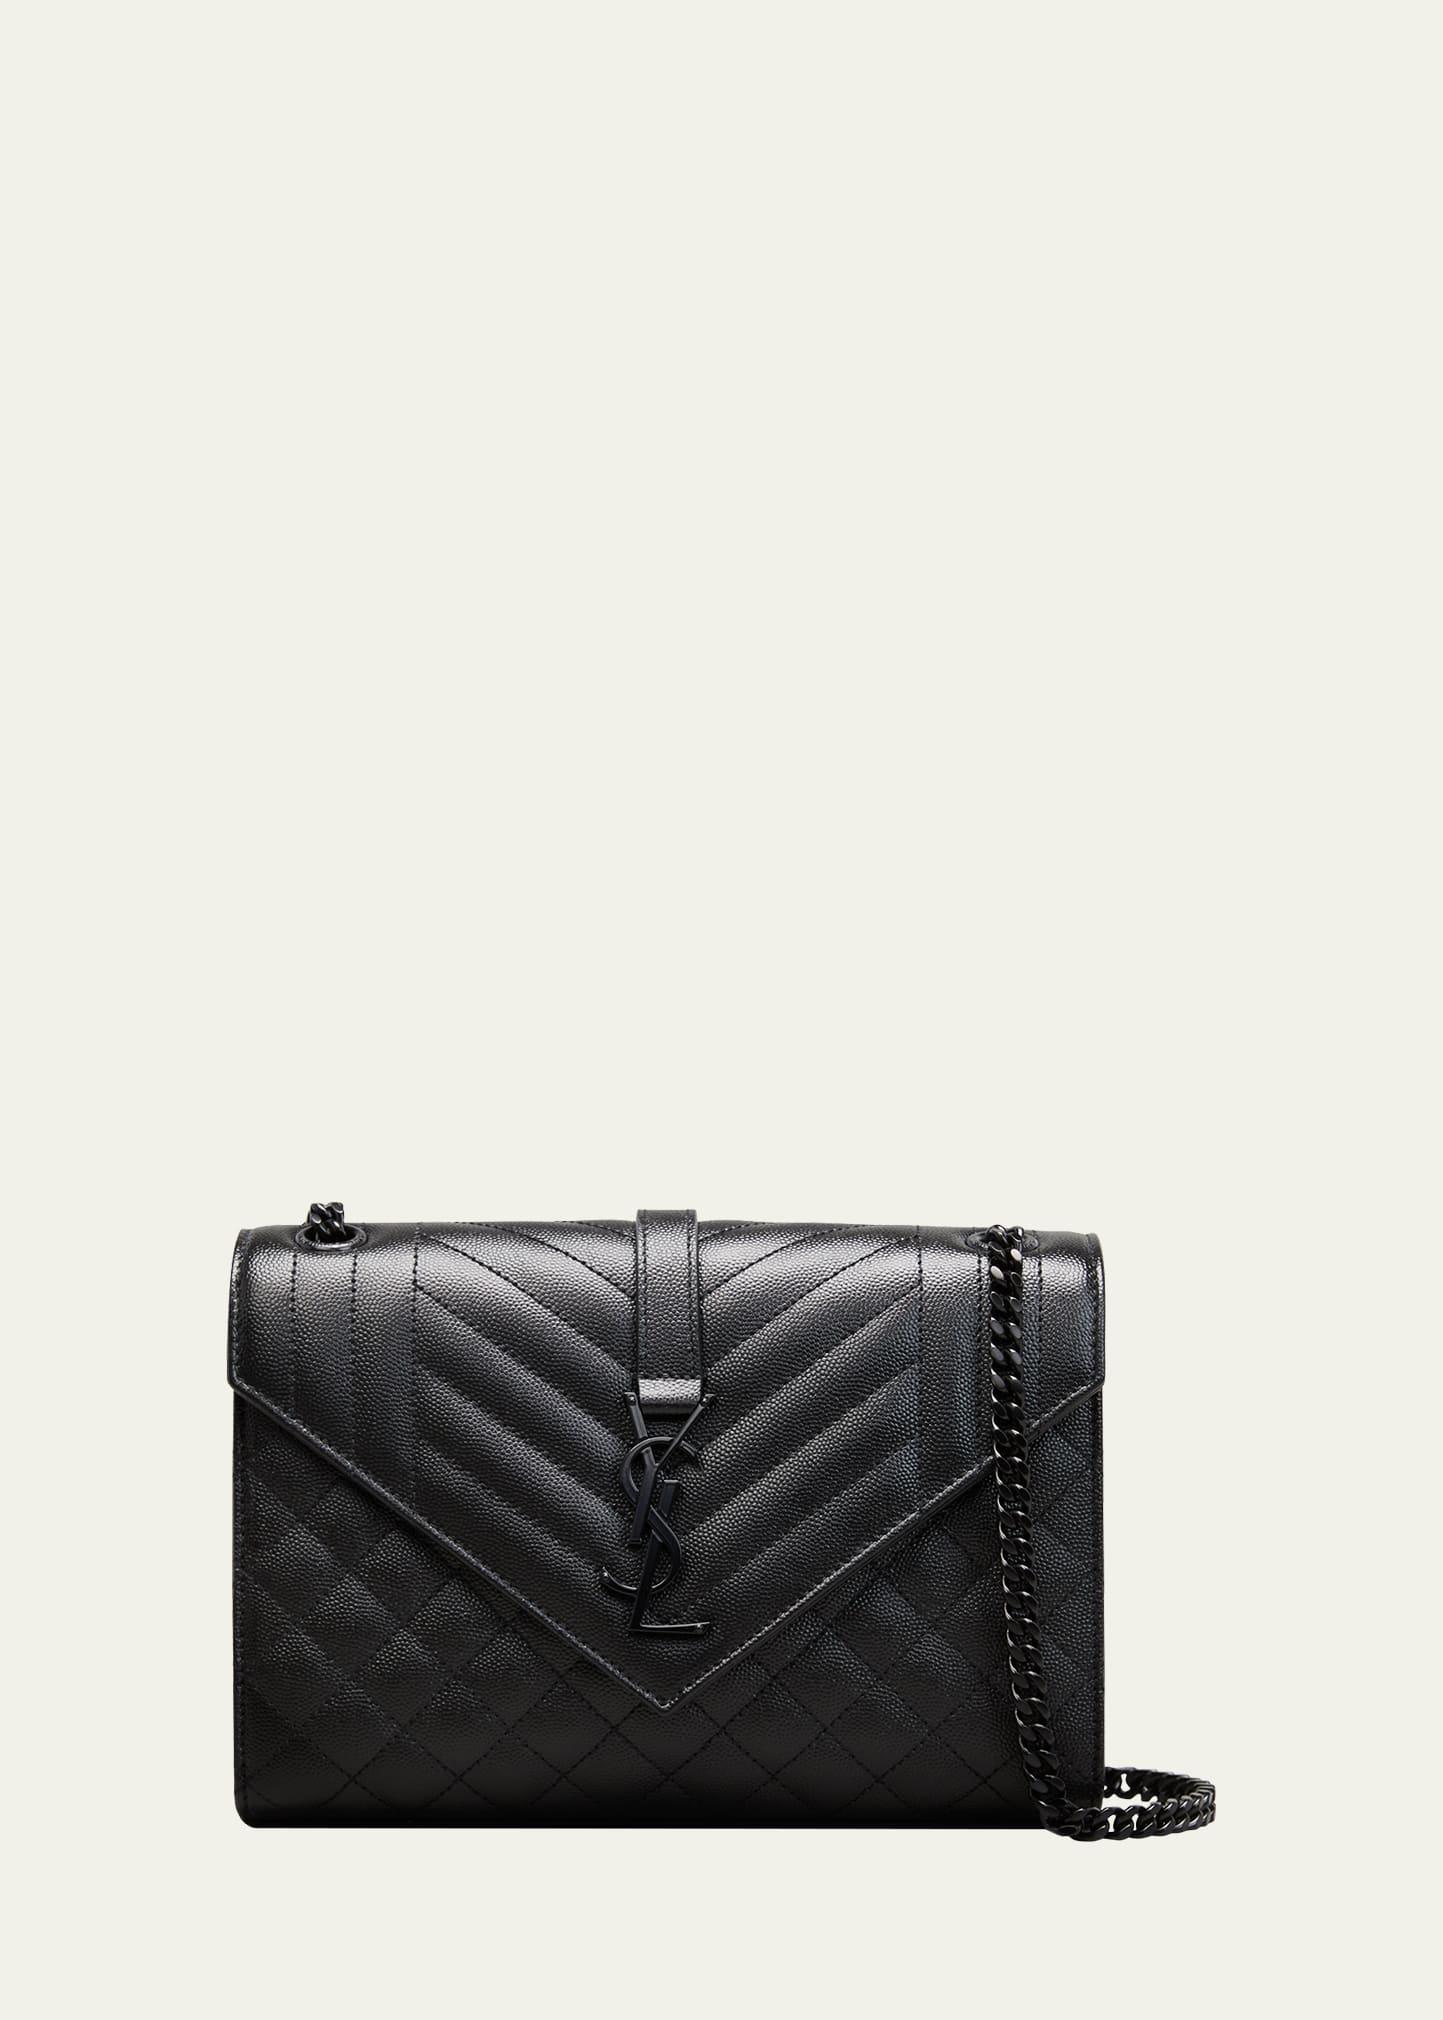 Saint Laurent Medium Monogram Tri-Quilted Leather Shoulder Bag